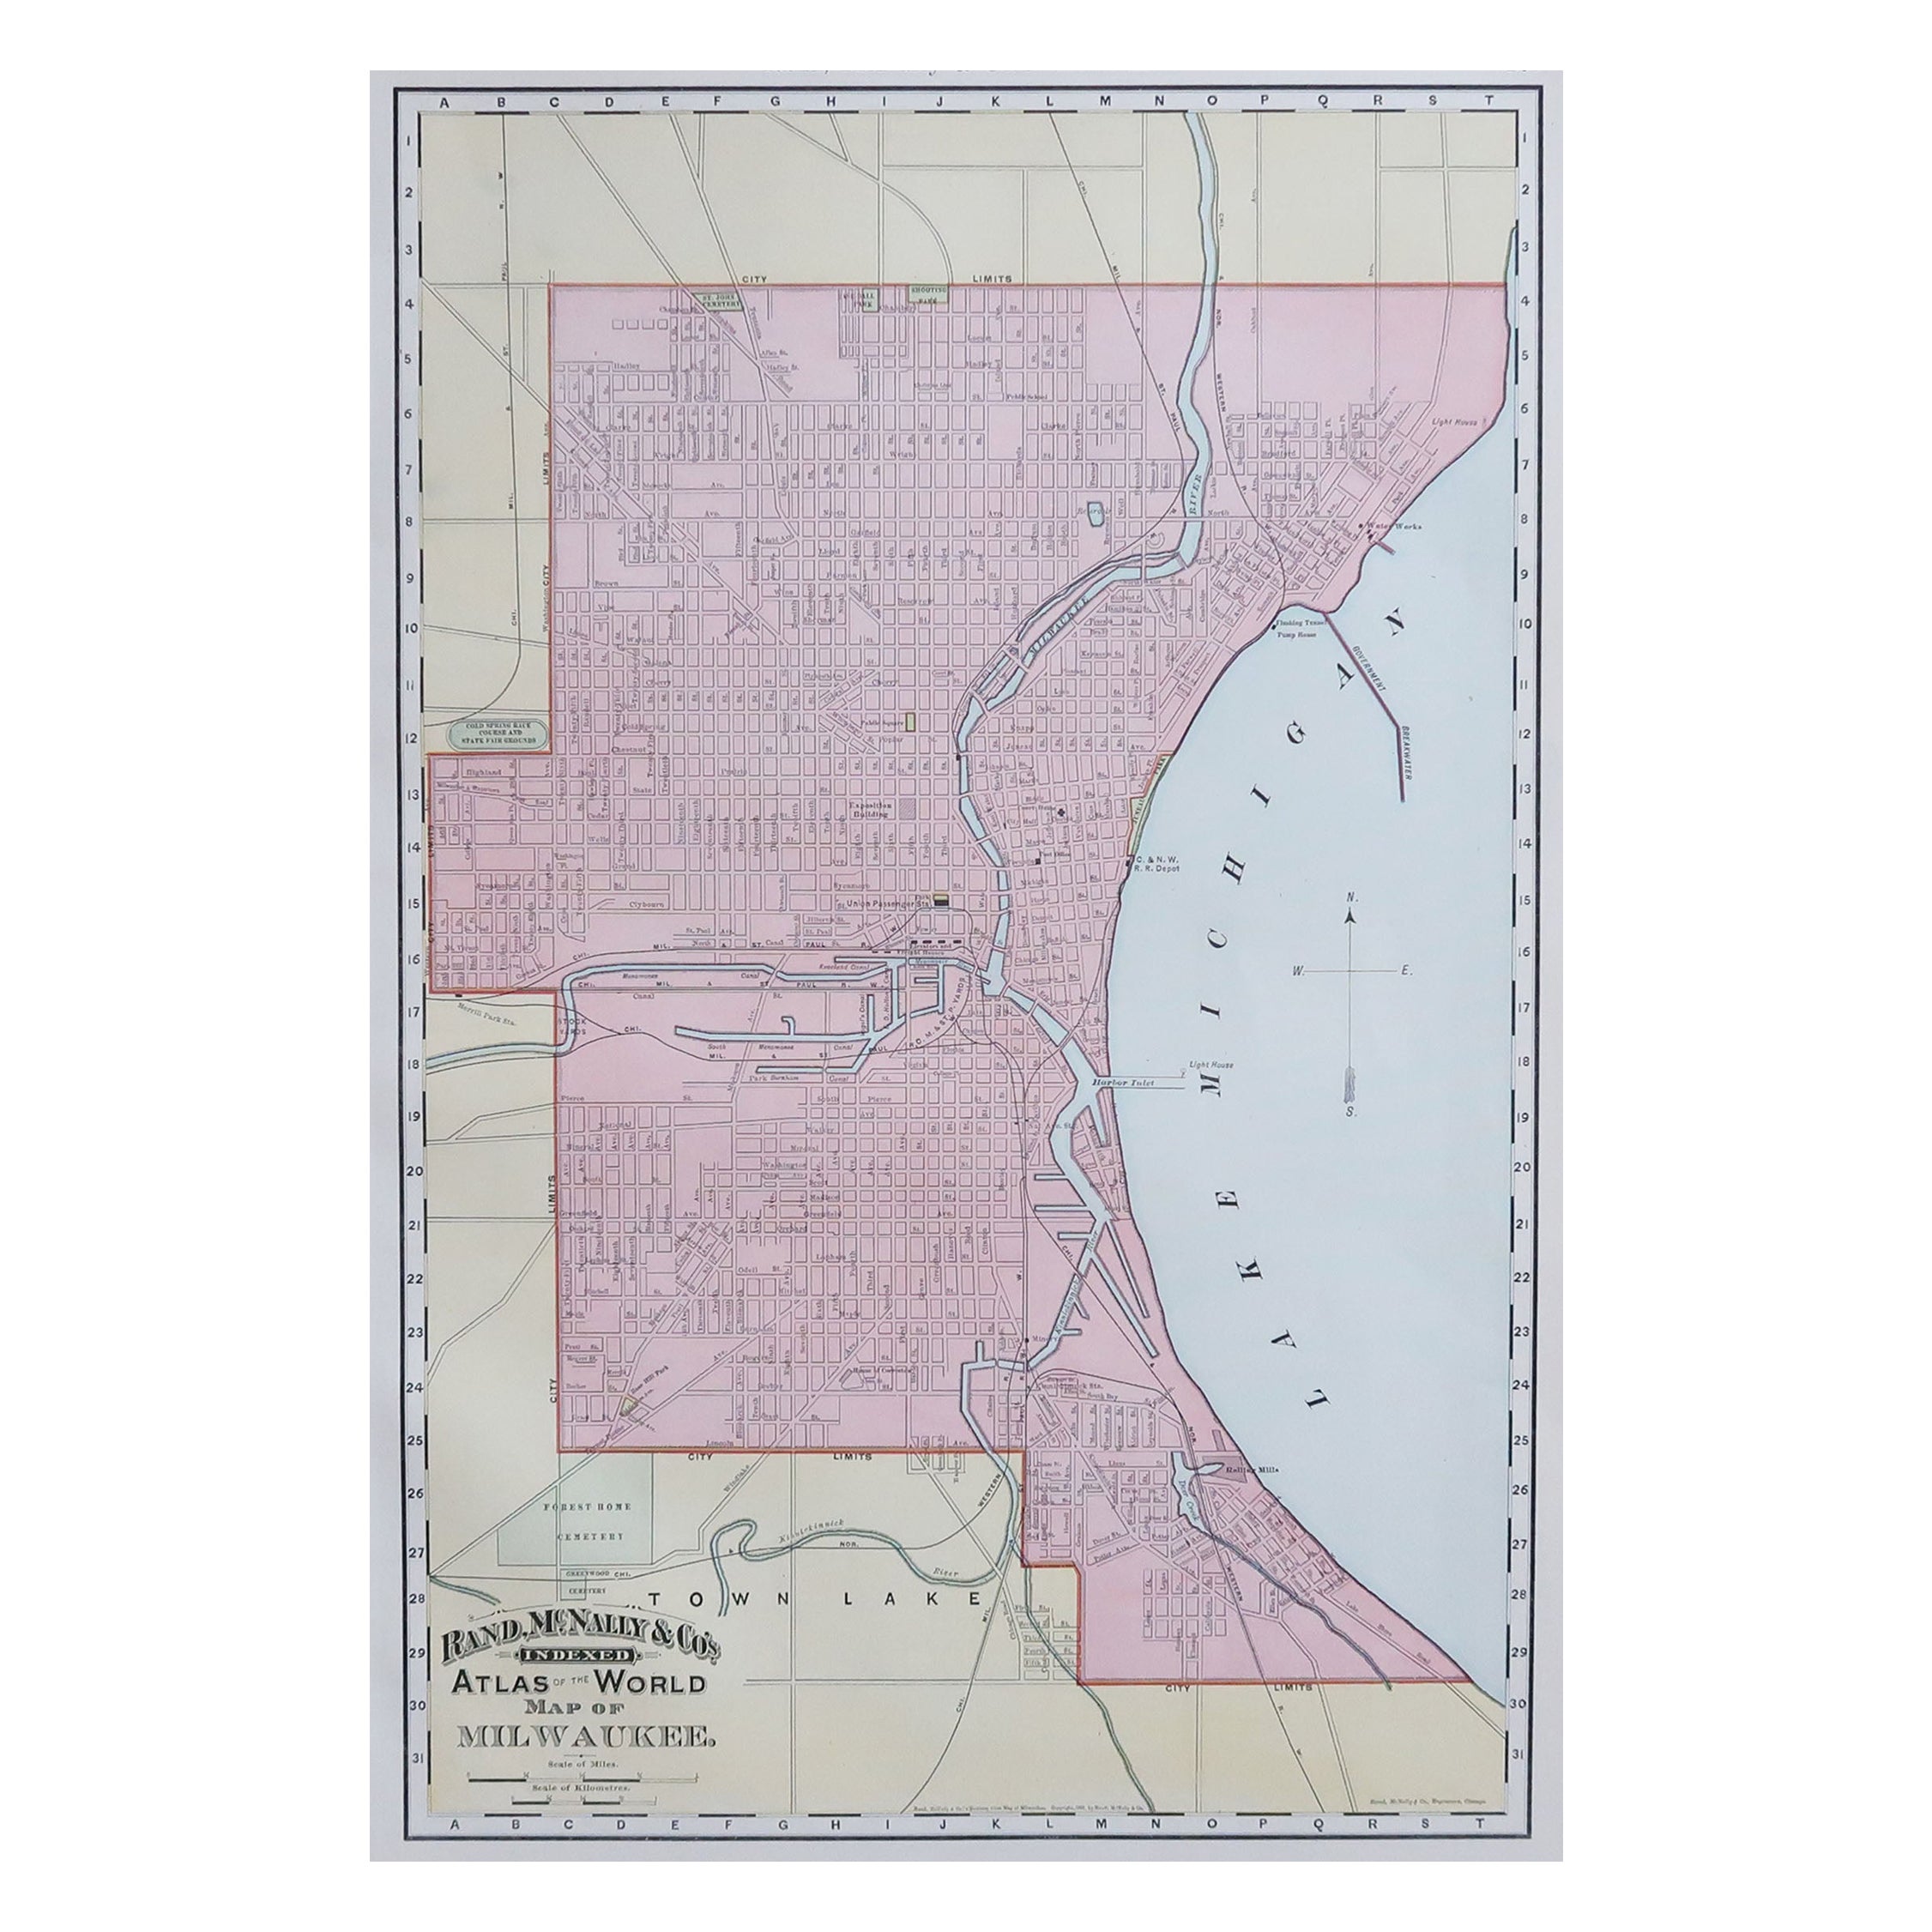 Plan de ville ancien original de Milwaukee, États-Unis, 1894